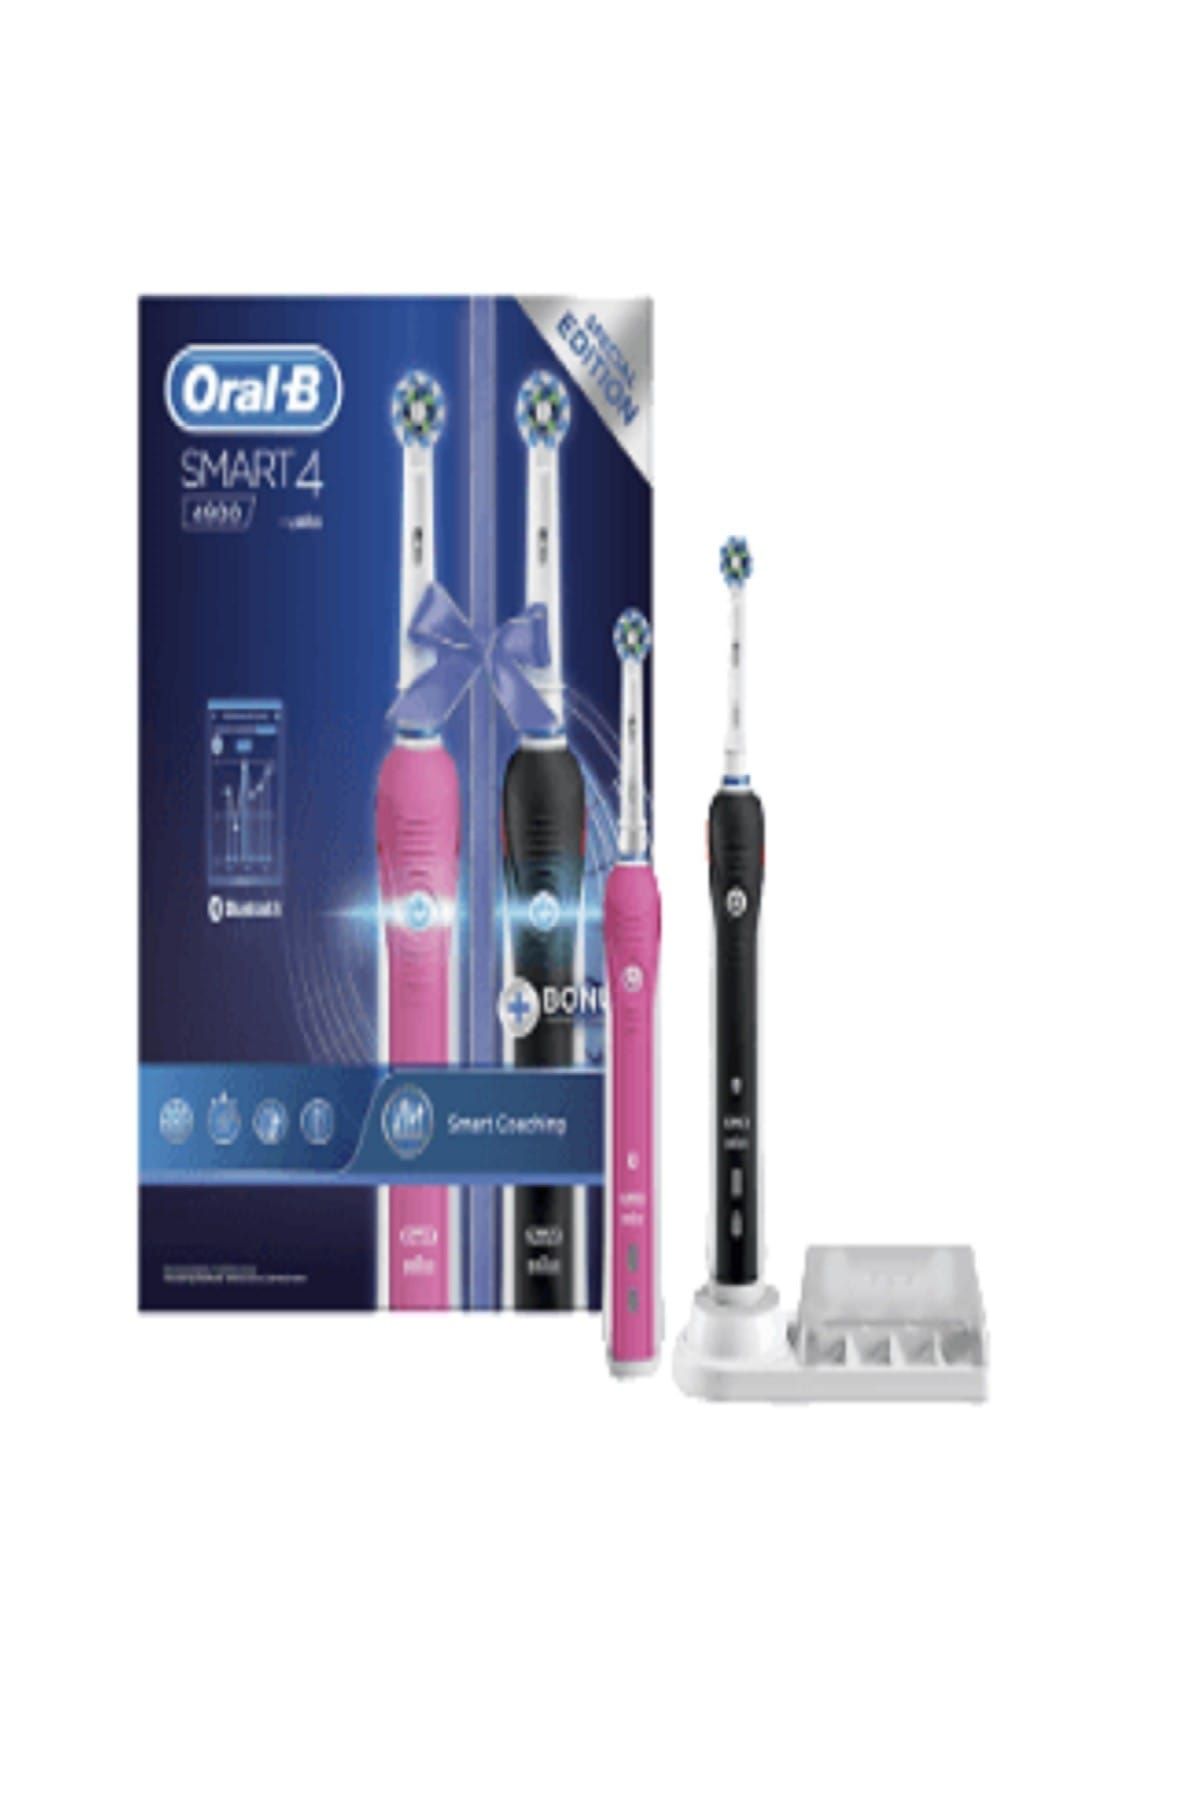 Oral-B Şarjlı Diş Fırçası Smart 4 4900 2 Li Avantaj Paketi